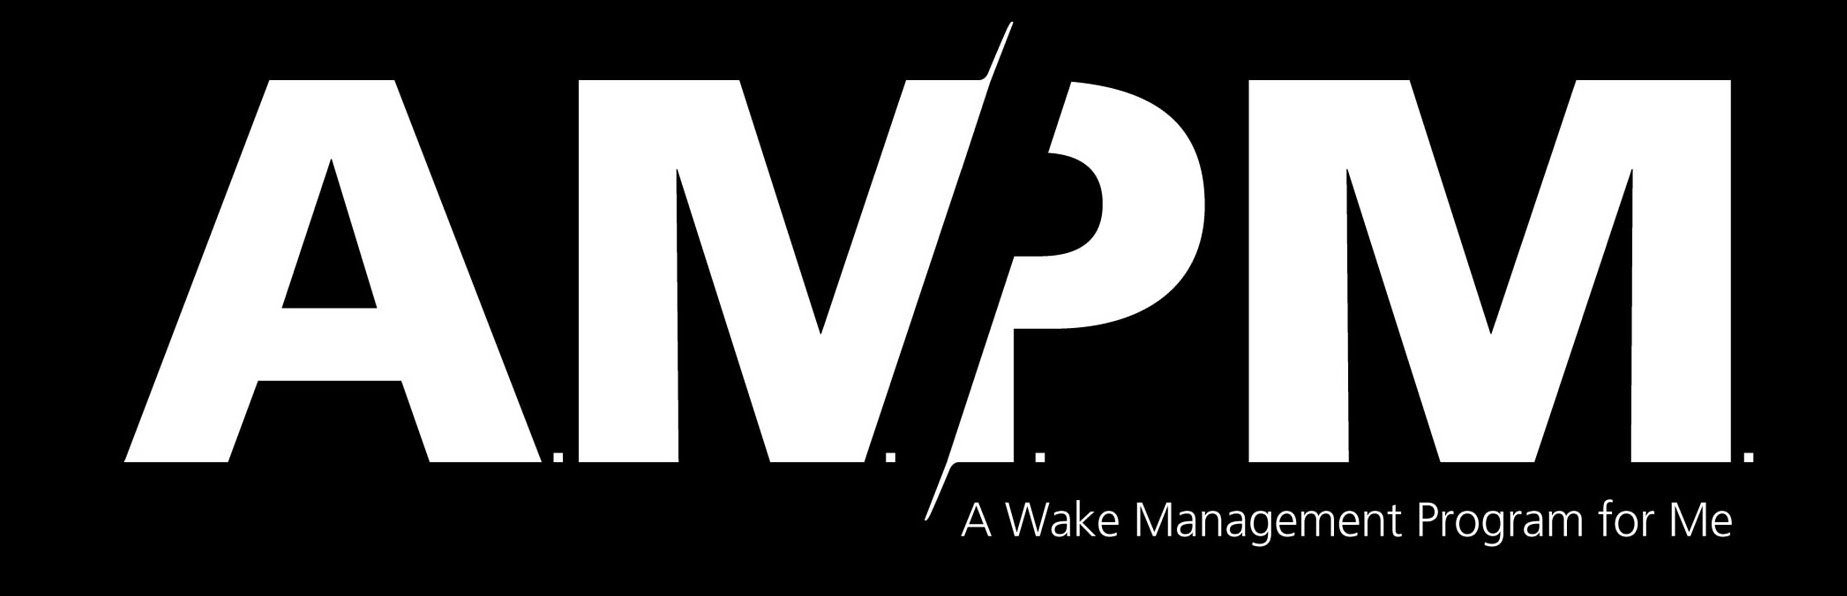 A.M.P.M. A WAKE MANAGEMENT PROGRAM FOR ME